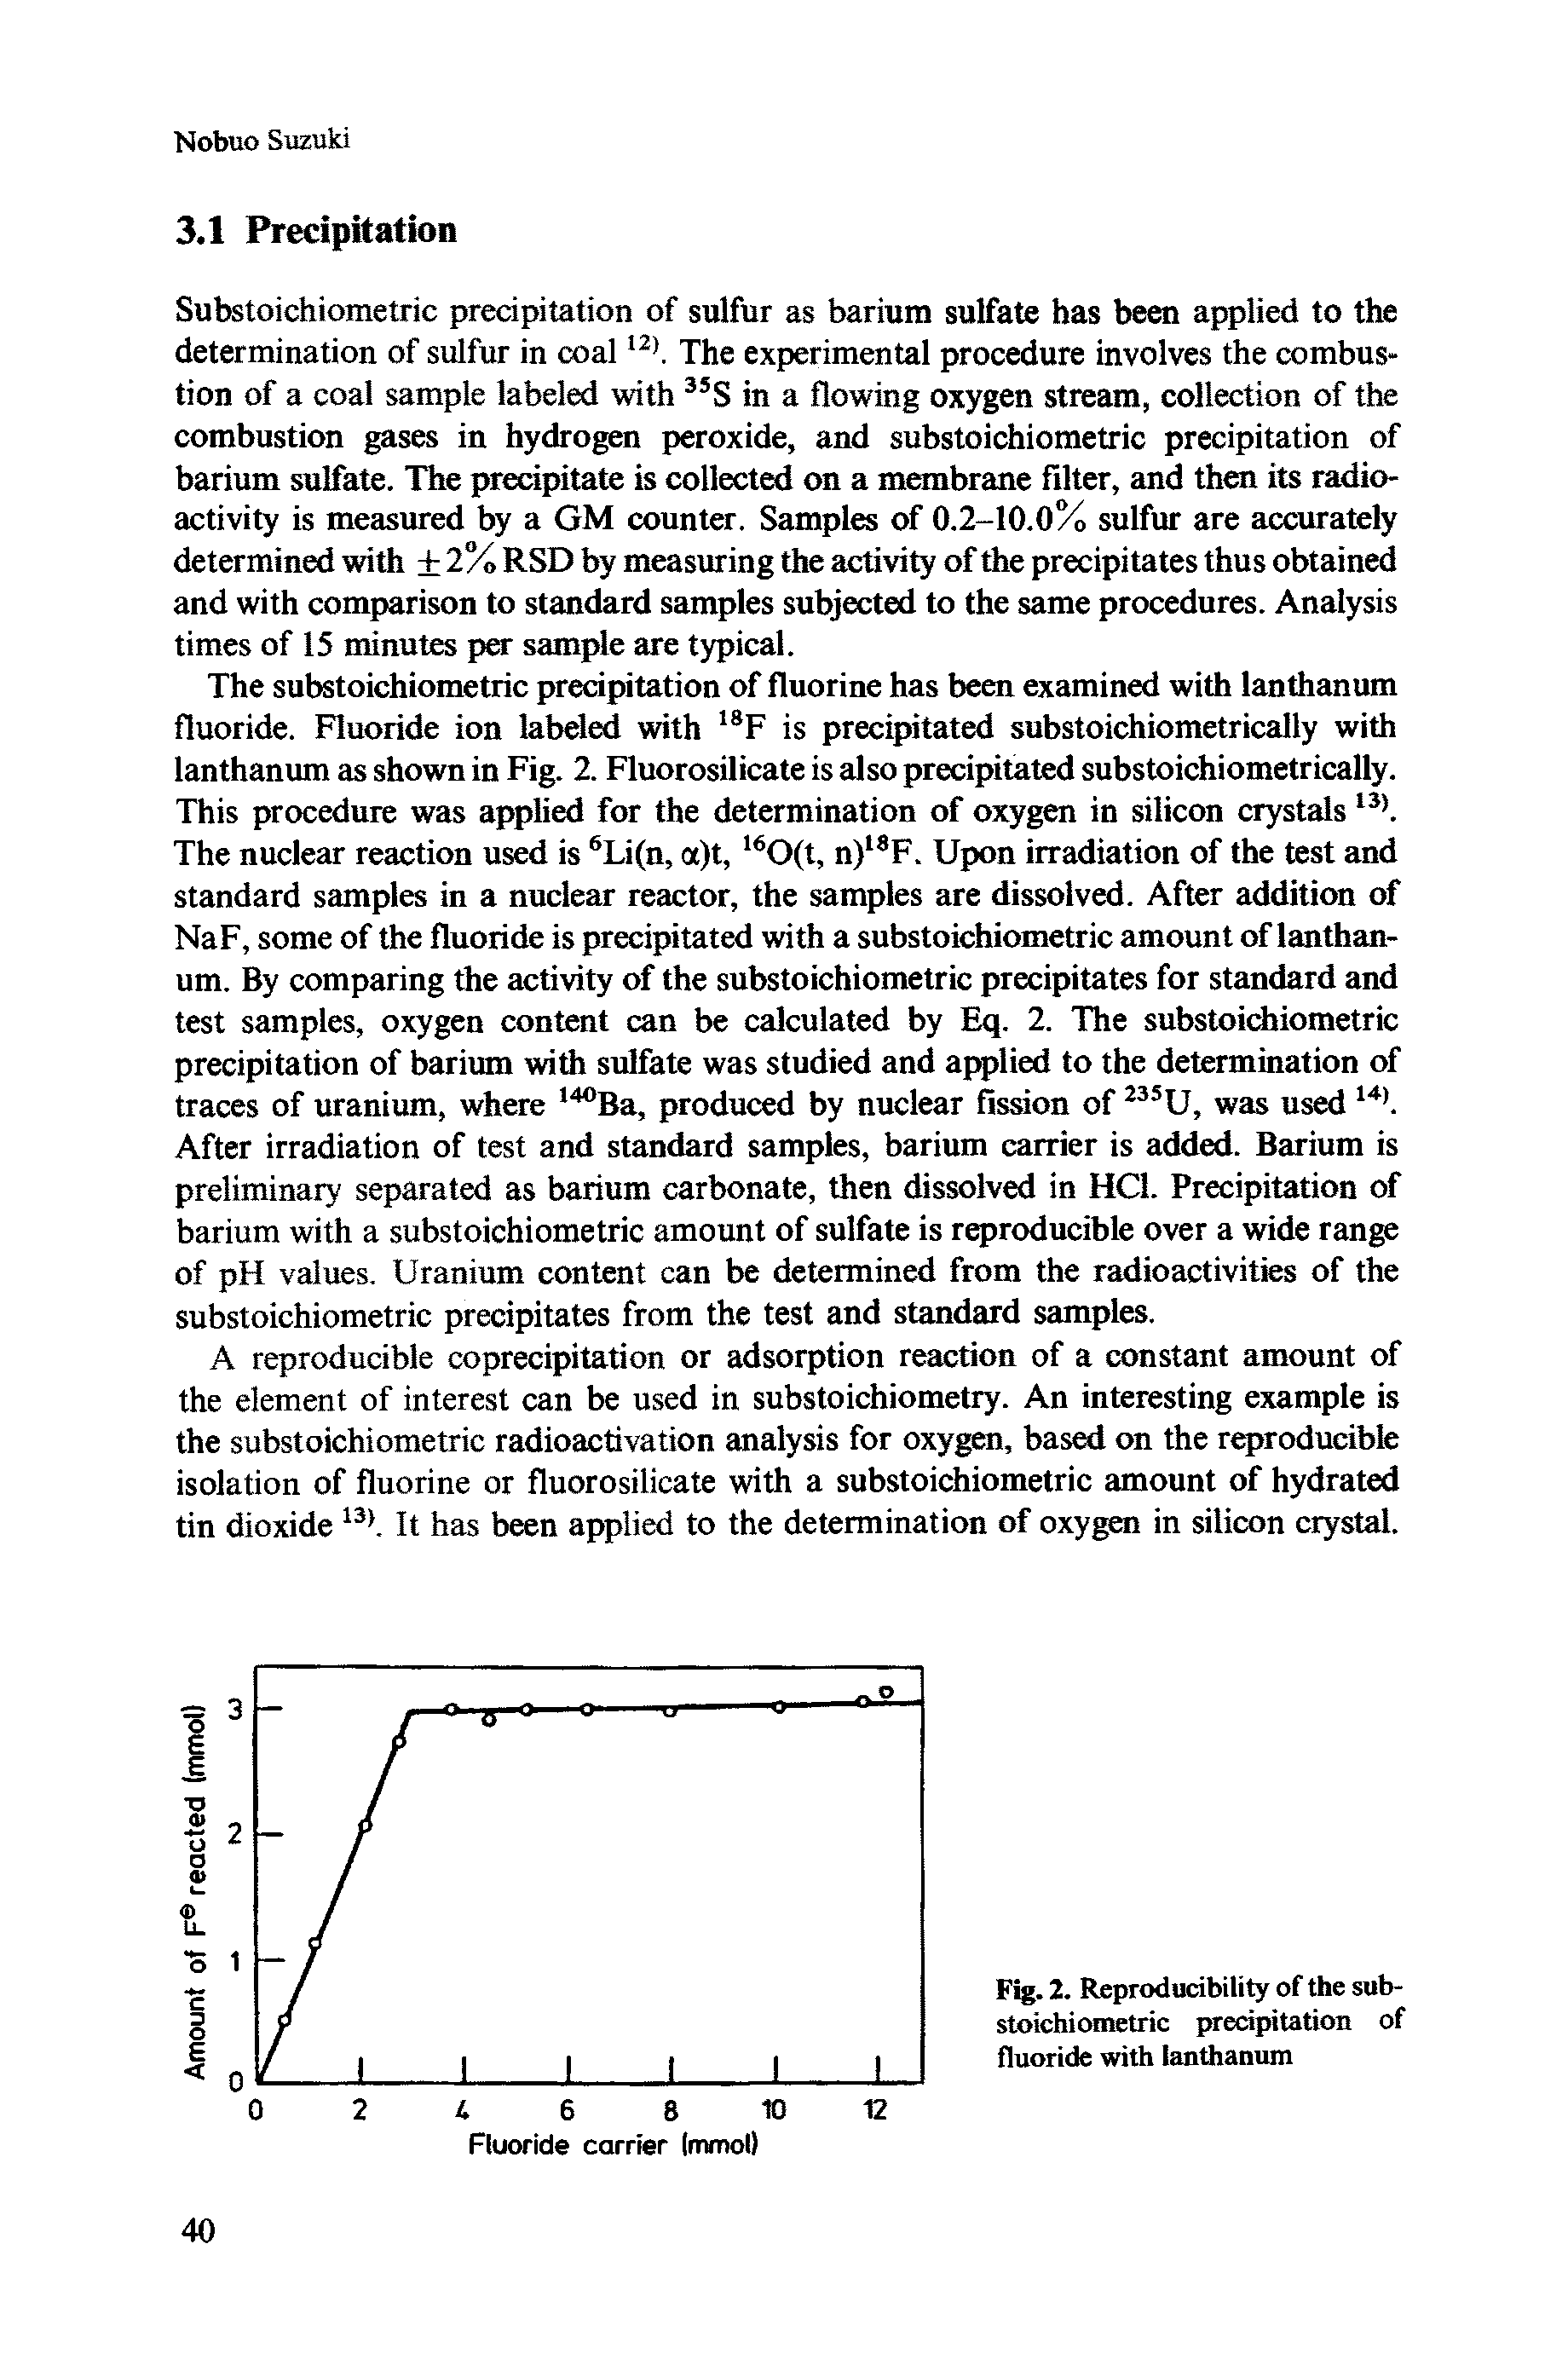 Fig. 2. Reproducibility of the sub-stoichiometric precipitation of fluoride with lanthanum...